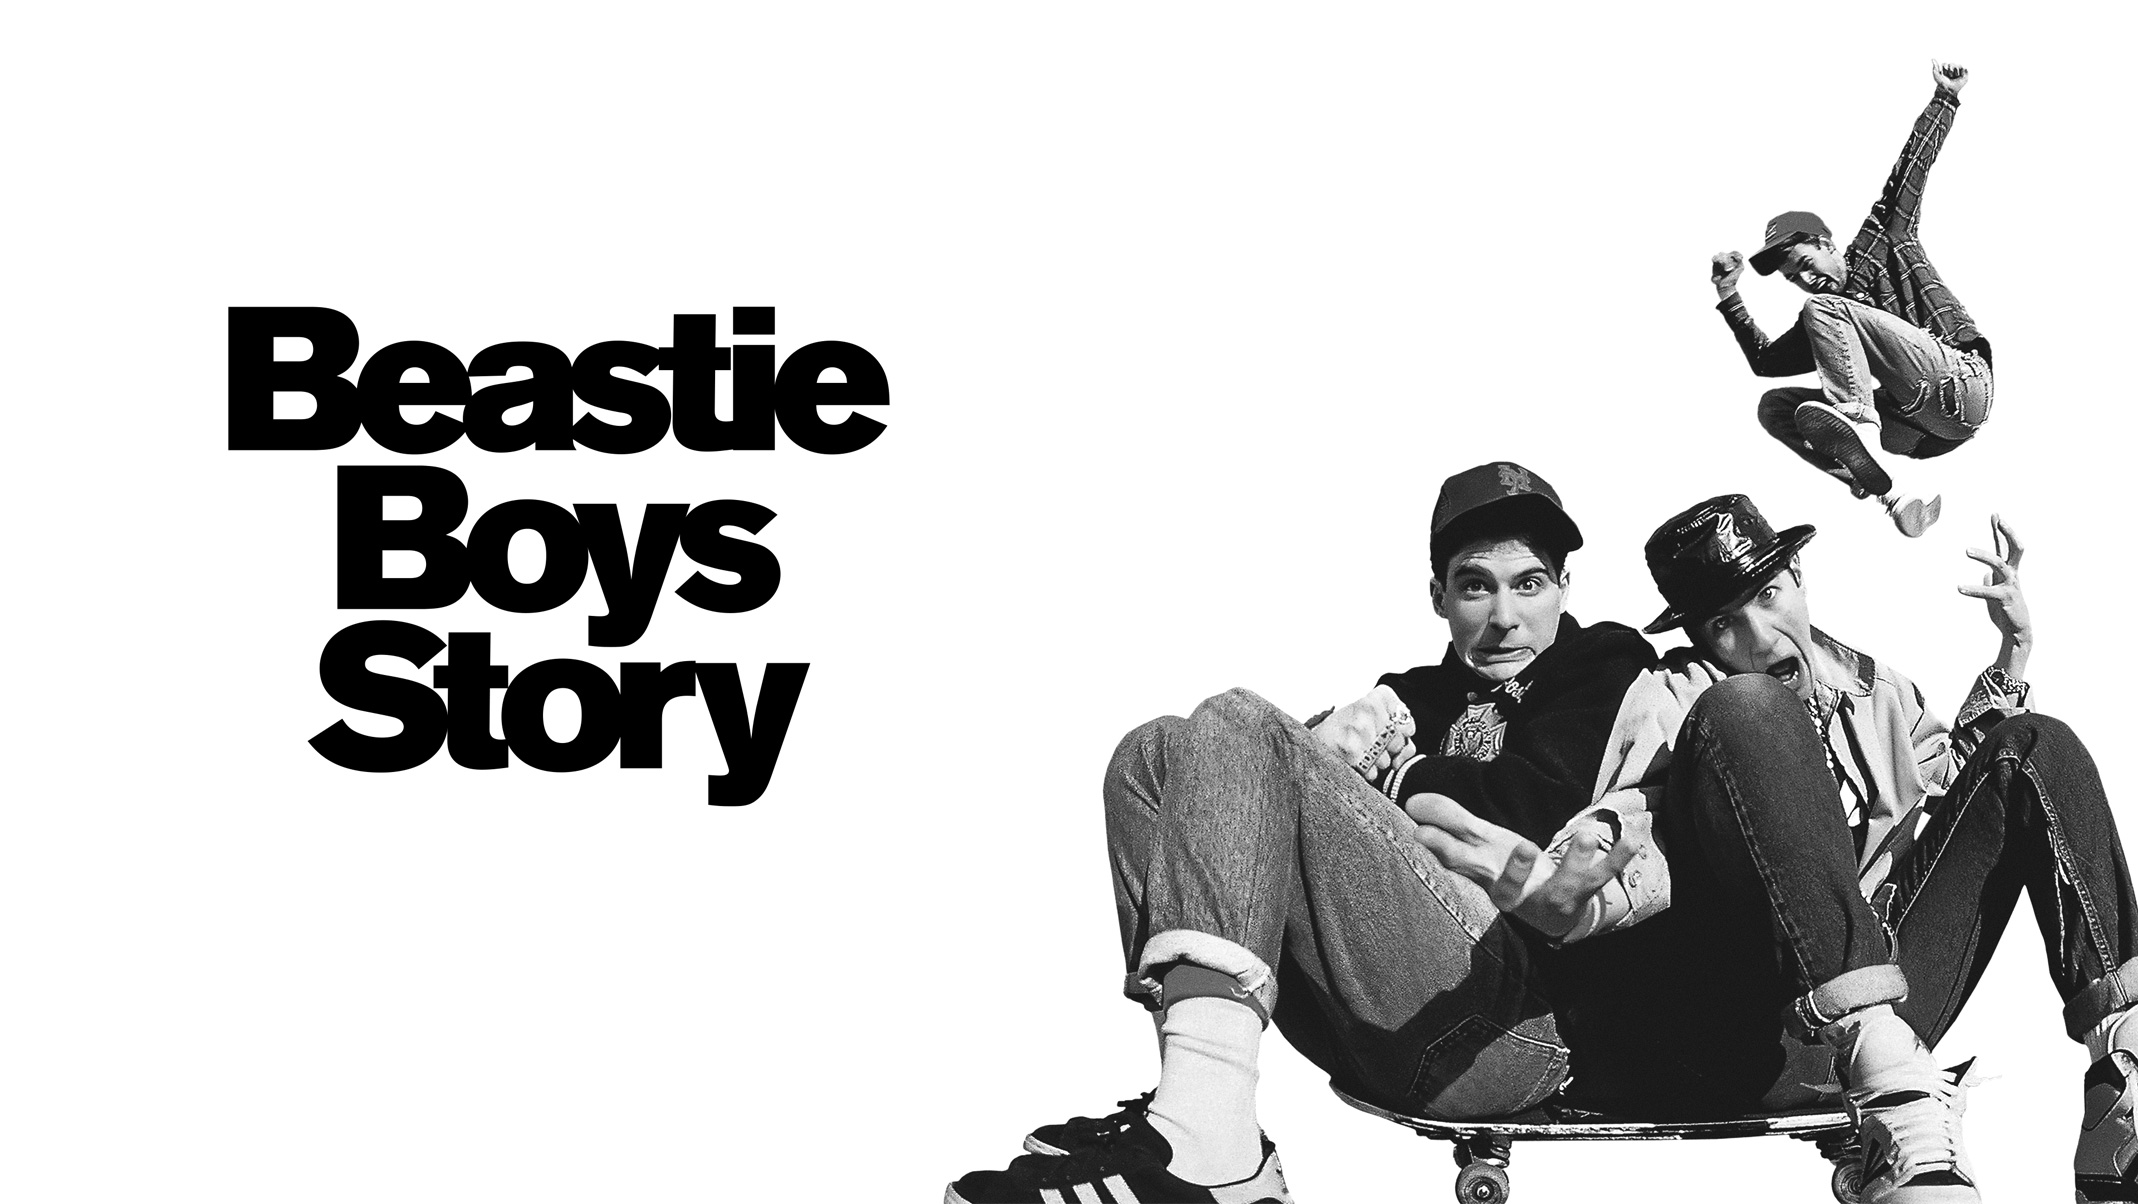 Beastie Boys Story - Apple TV+ Press